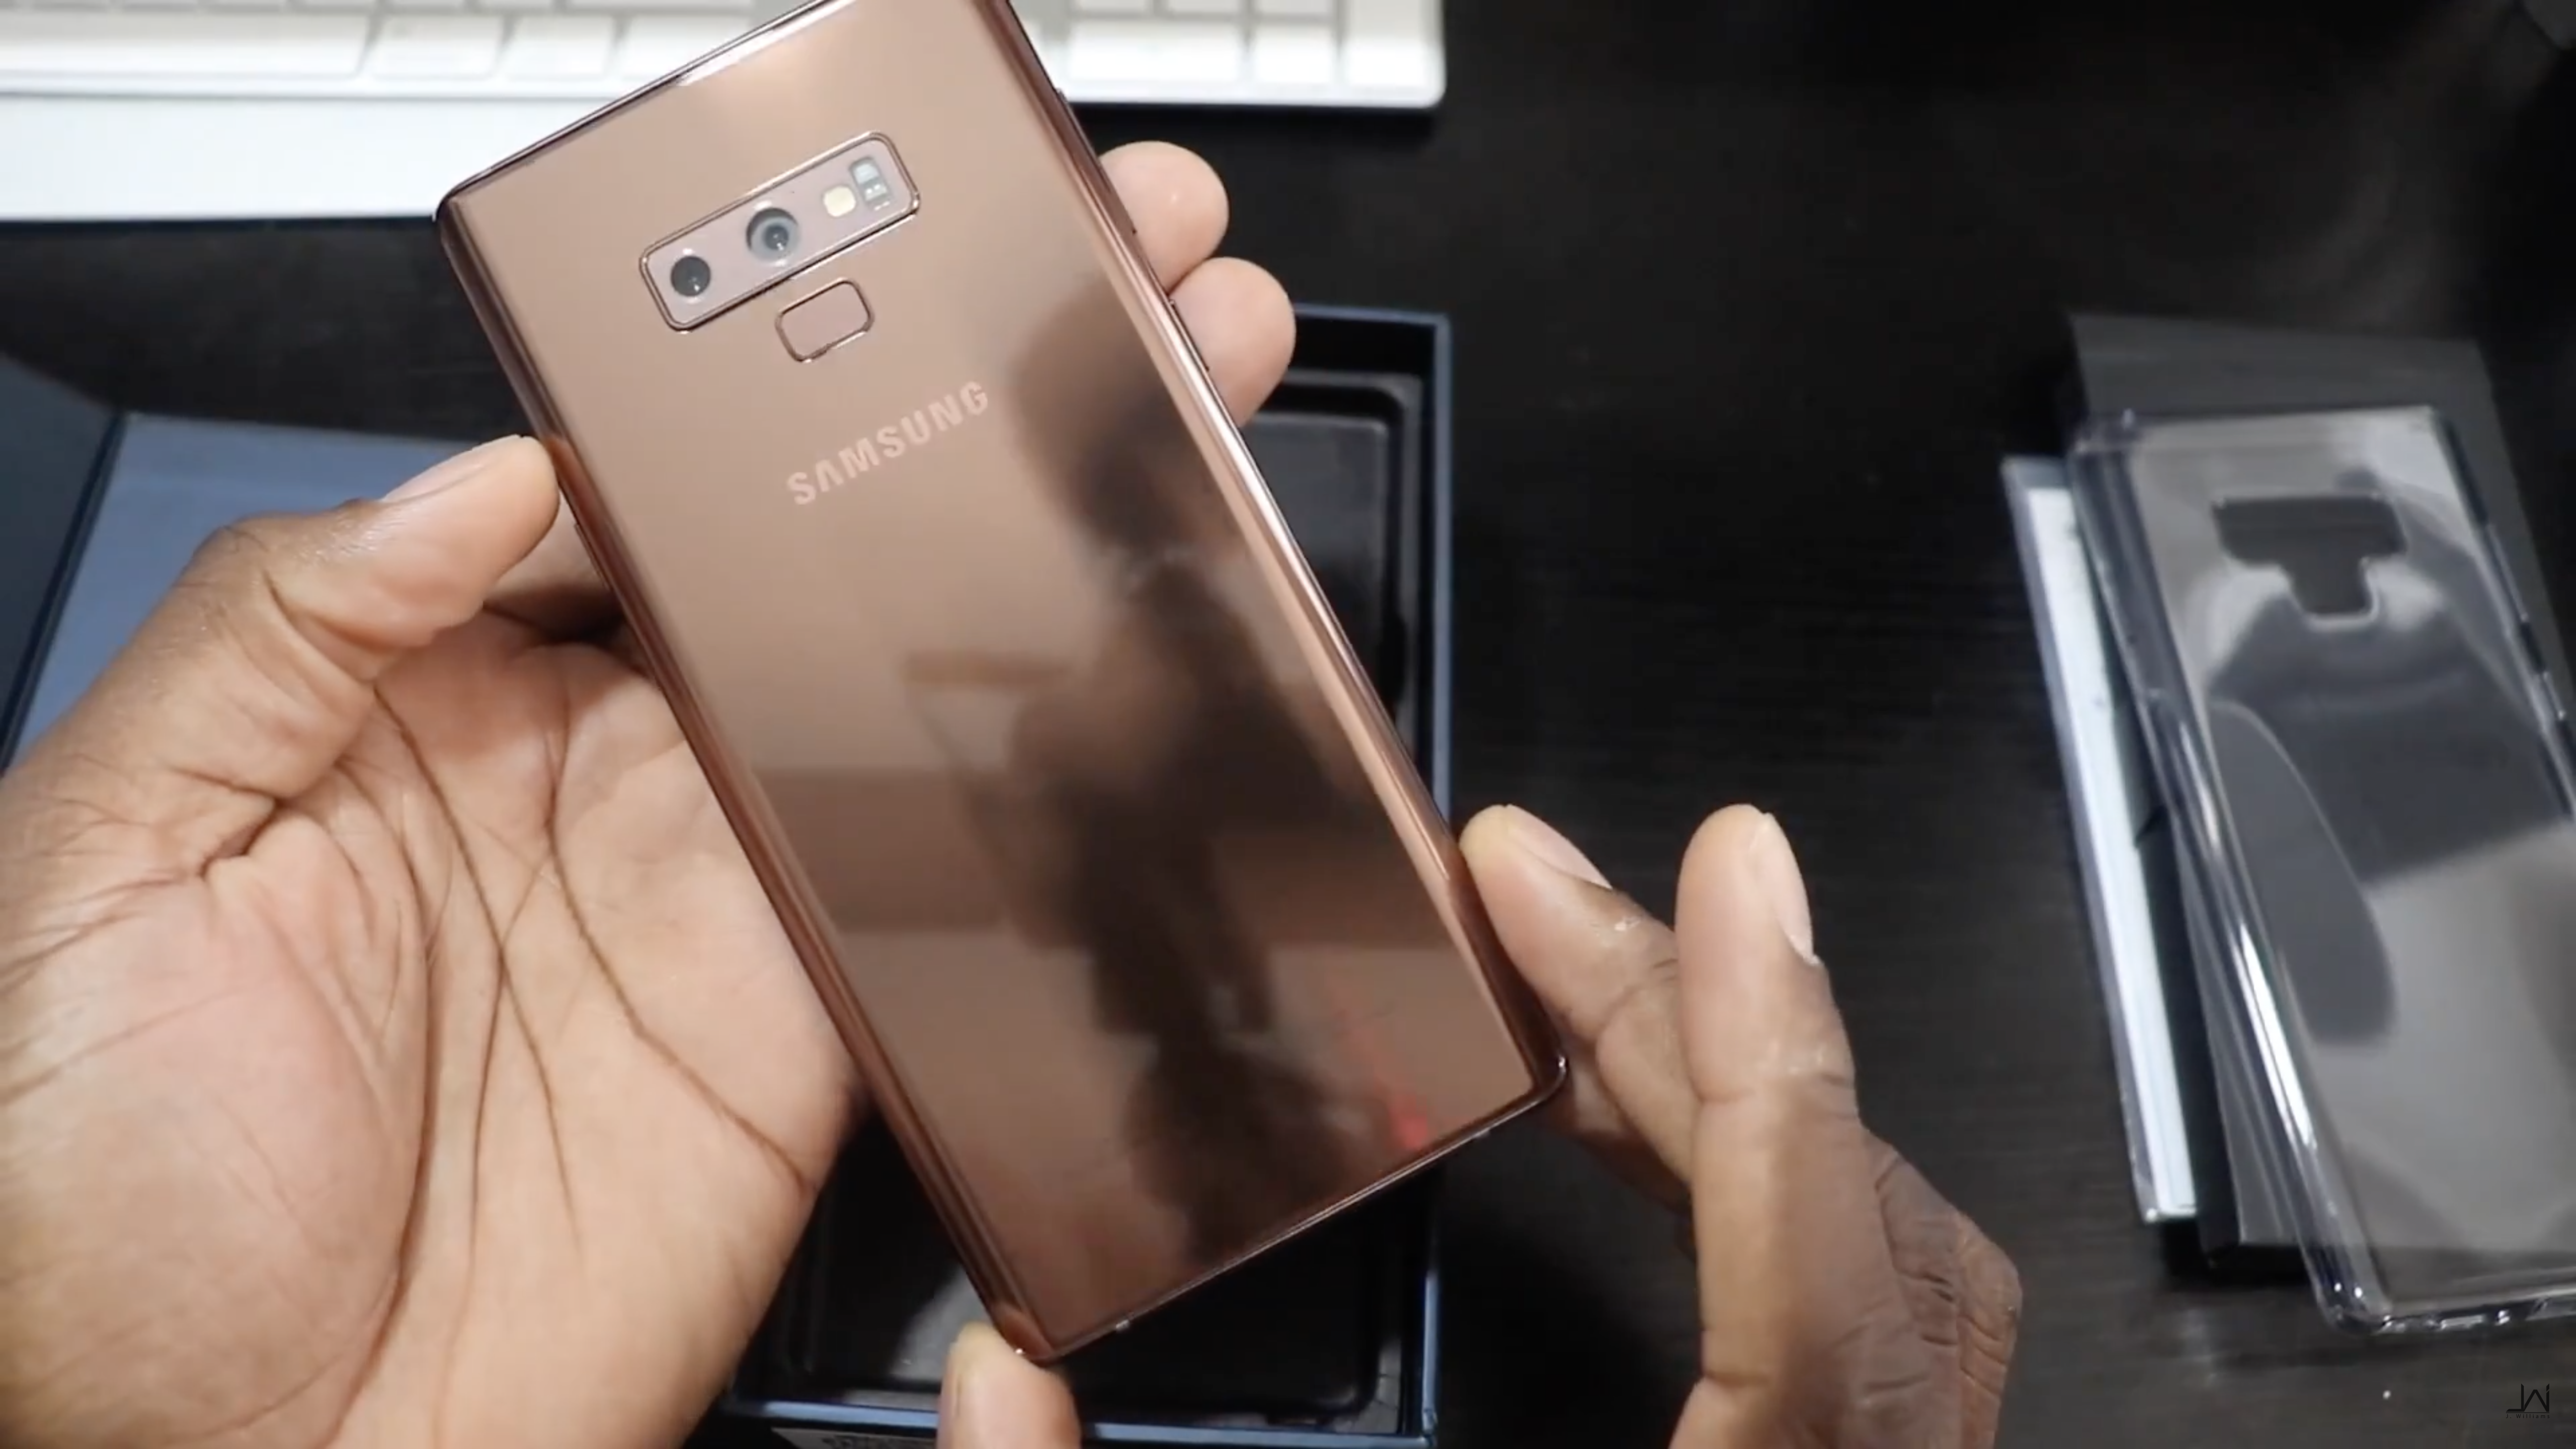 Samsung Galaxy Note 9 бронзовый. Samsung Galaxy Note 9 Brown (2 SIM). Galaxy Note 9 бронза и белый рядом. Copper 9.